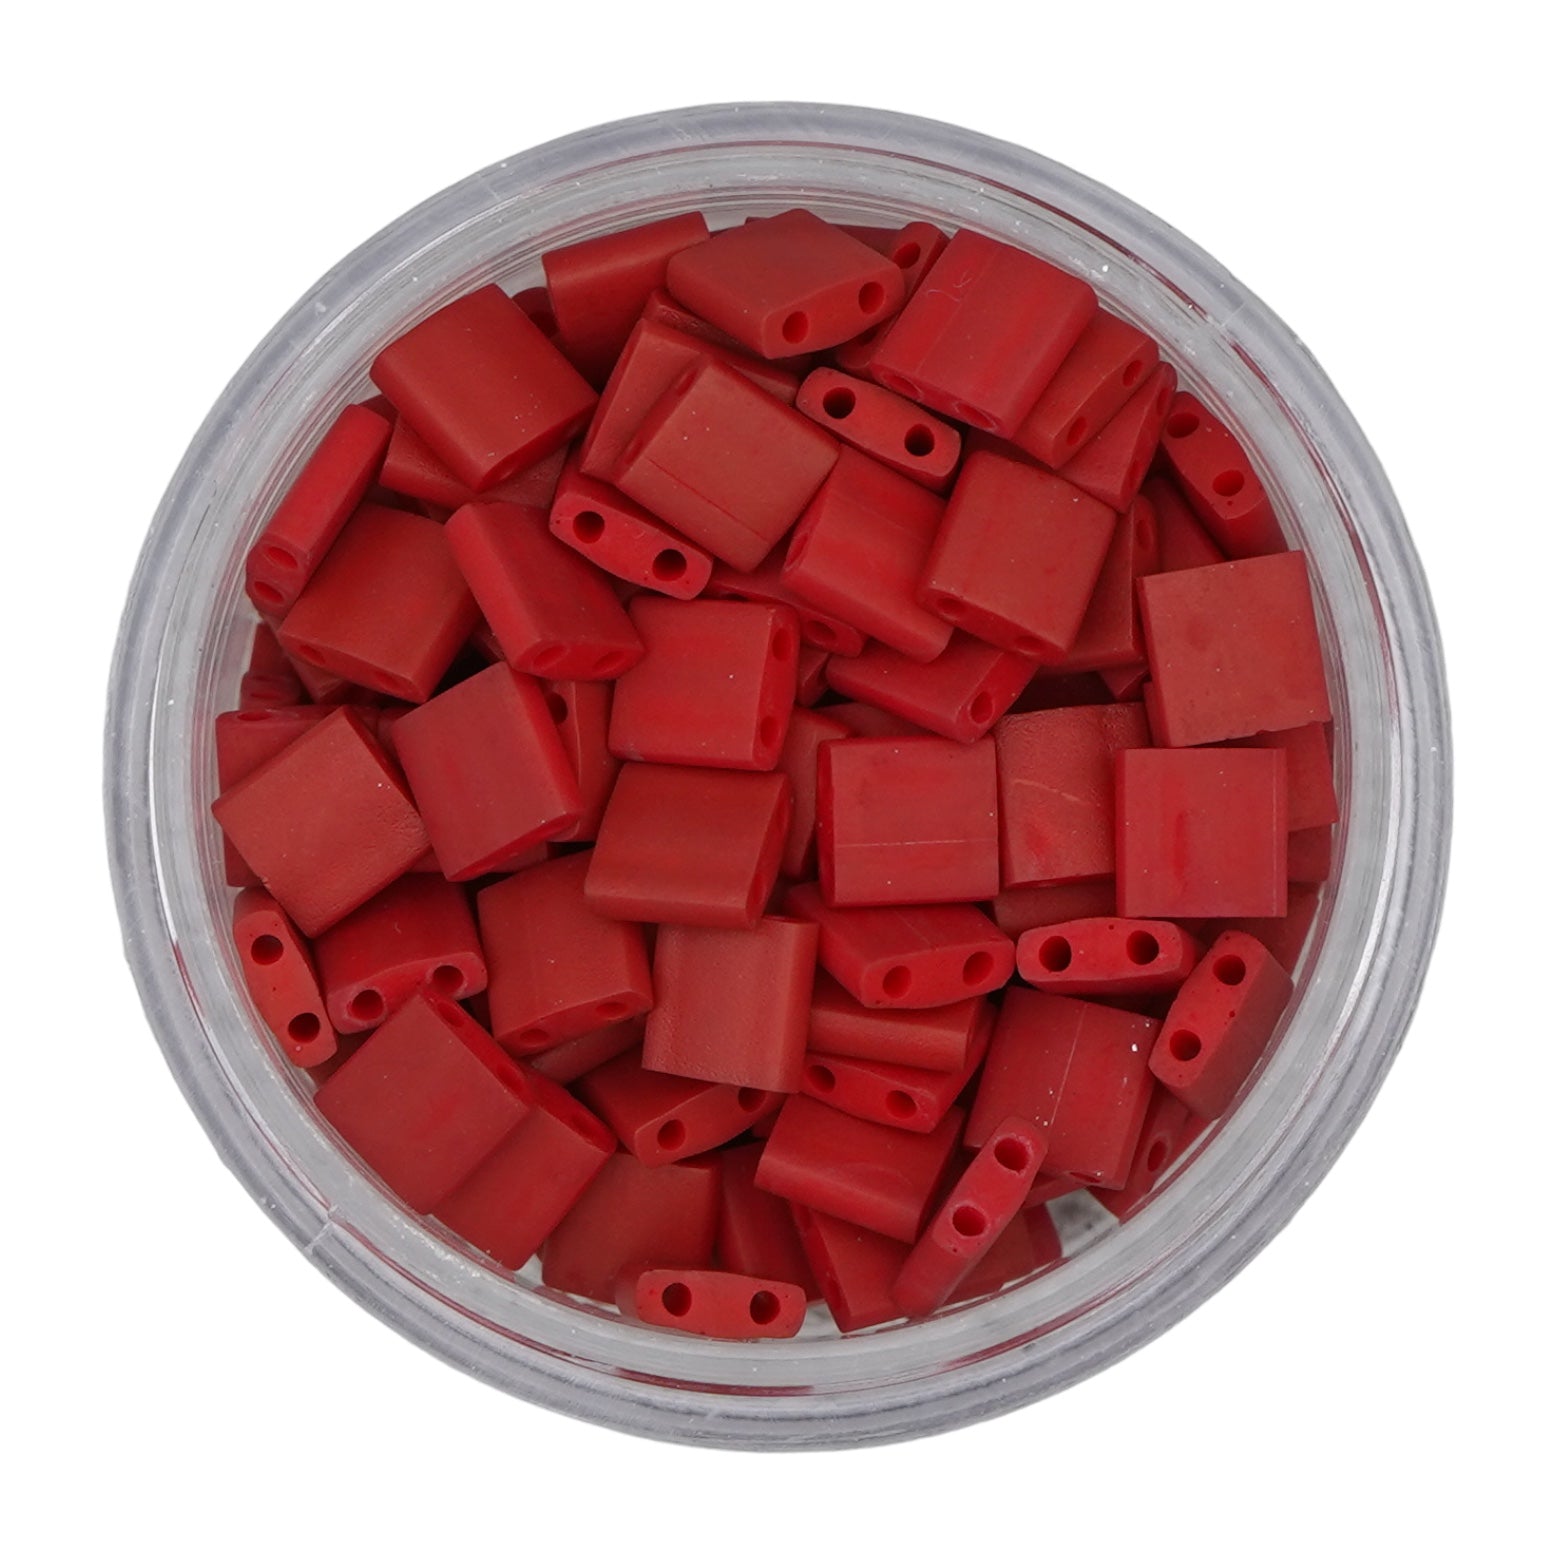 2040 Tila Beads - Dark Red Matte